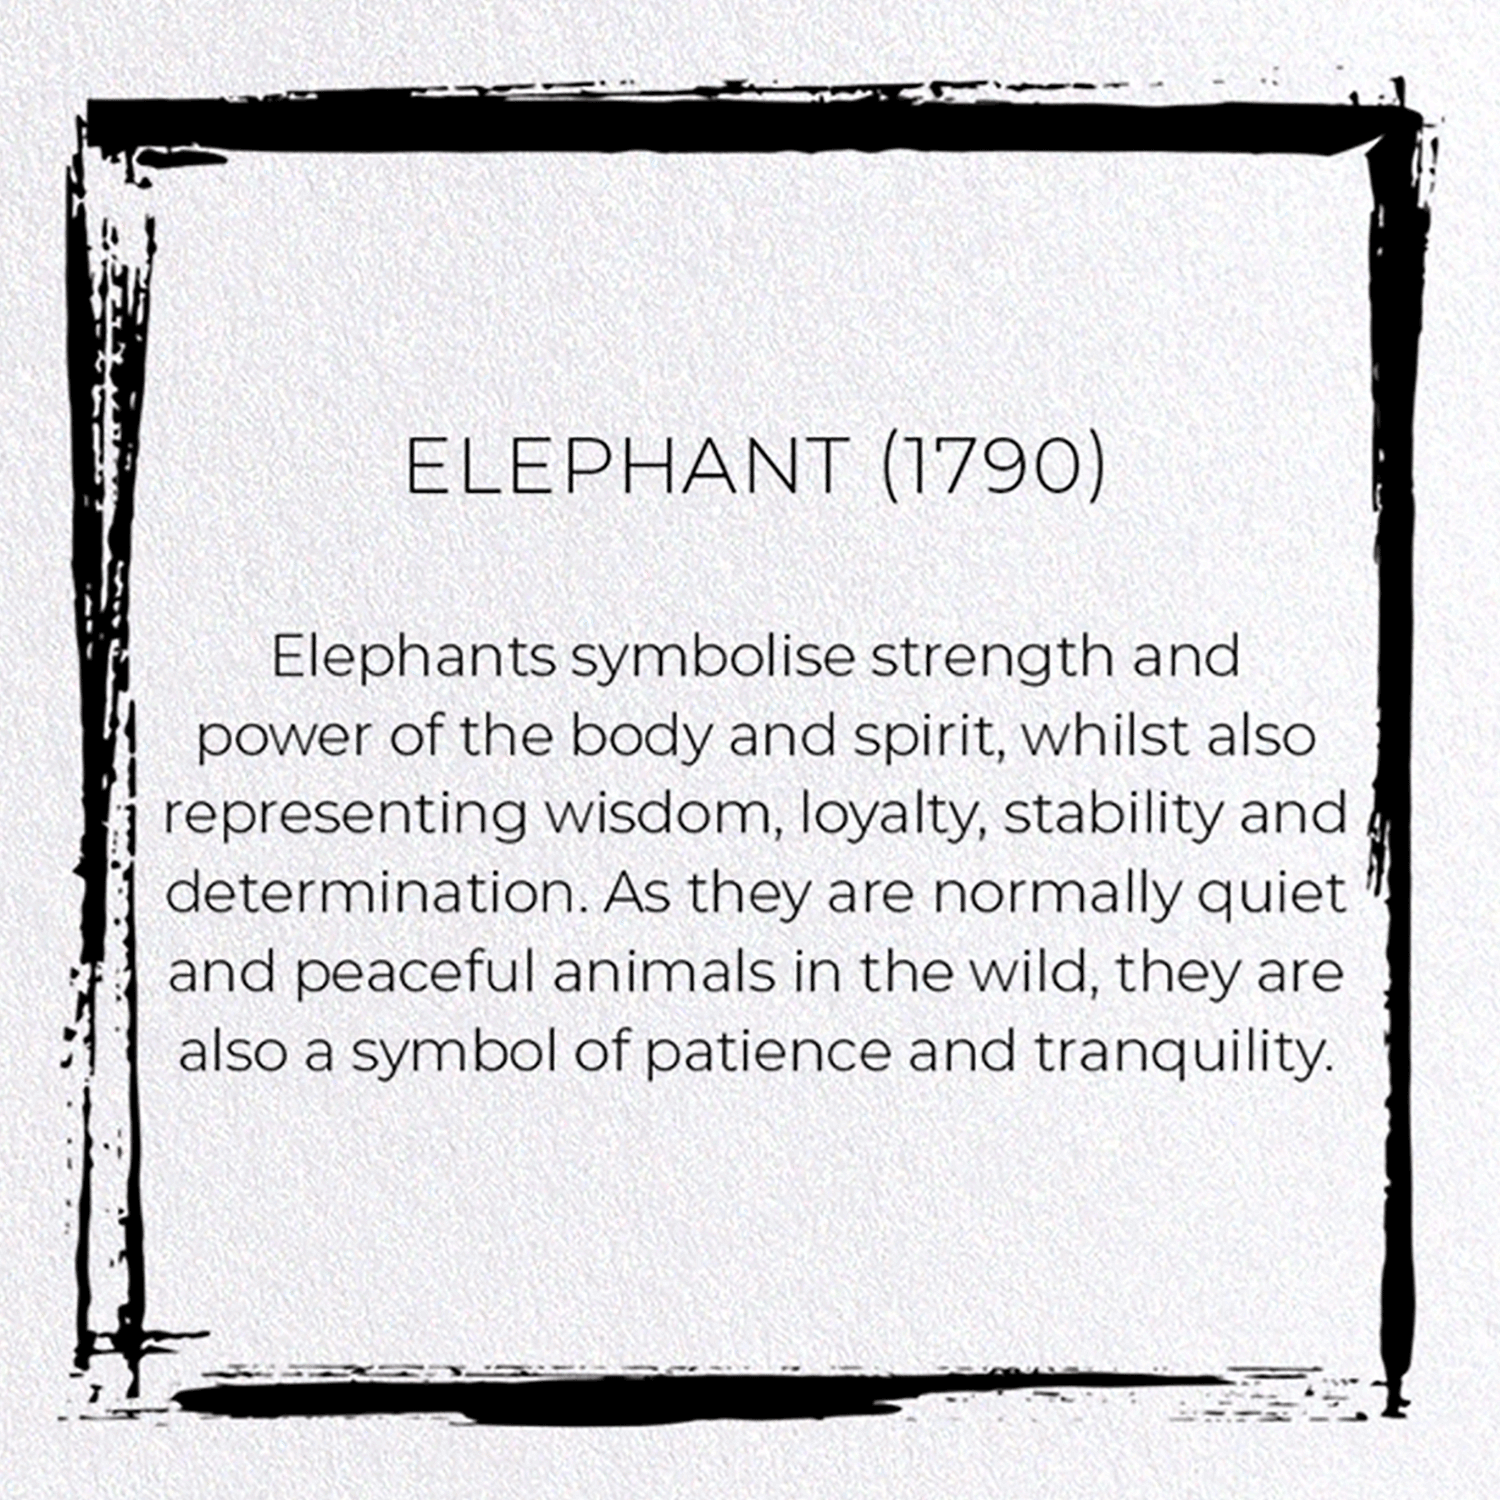 ELEPHANT (1790)